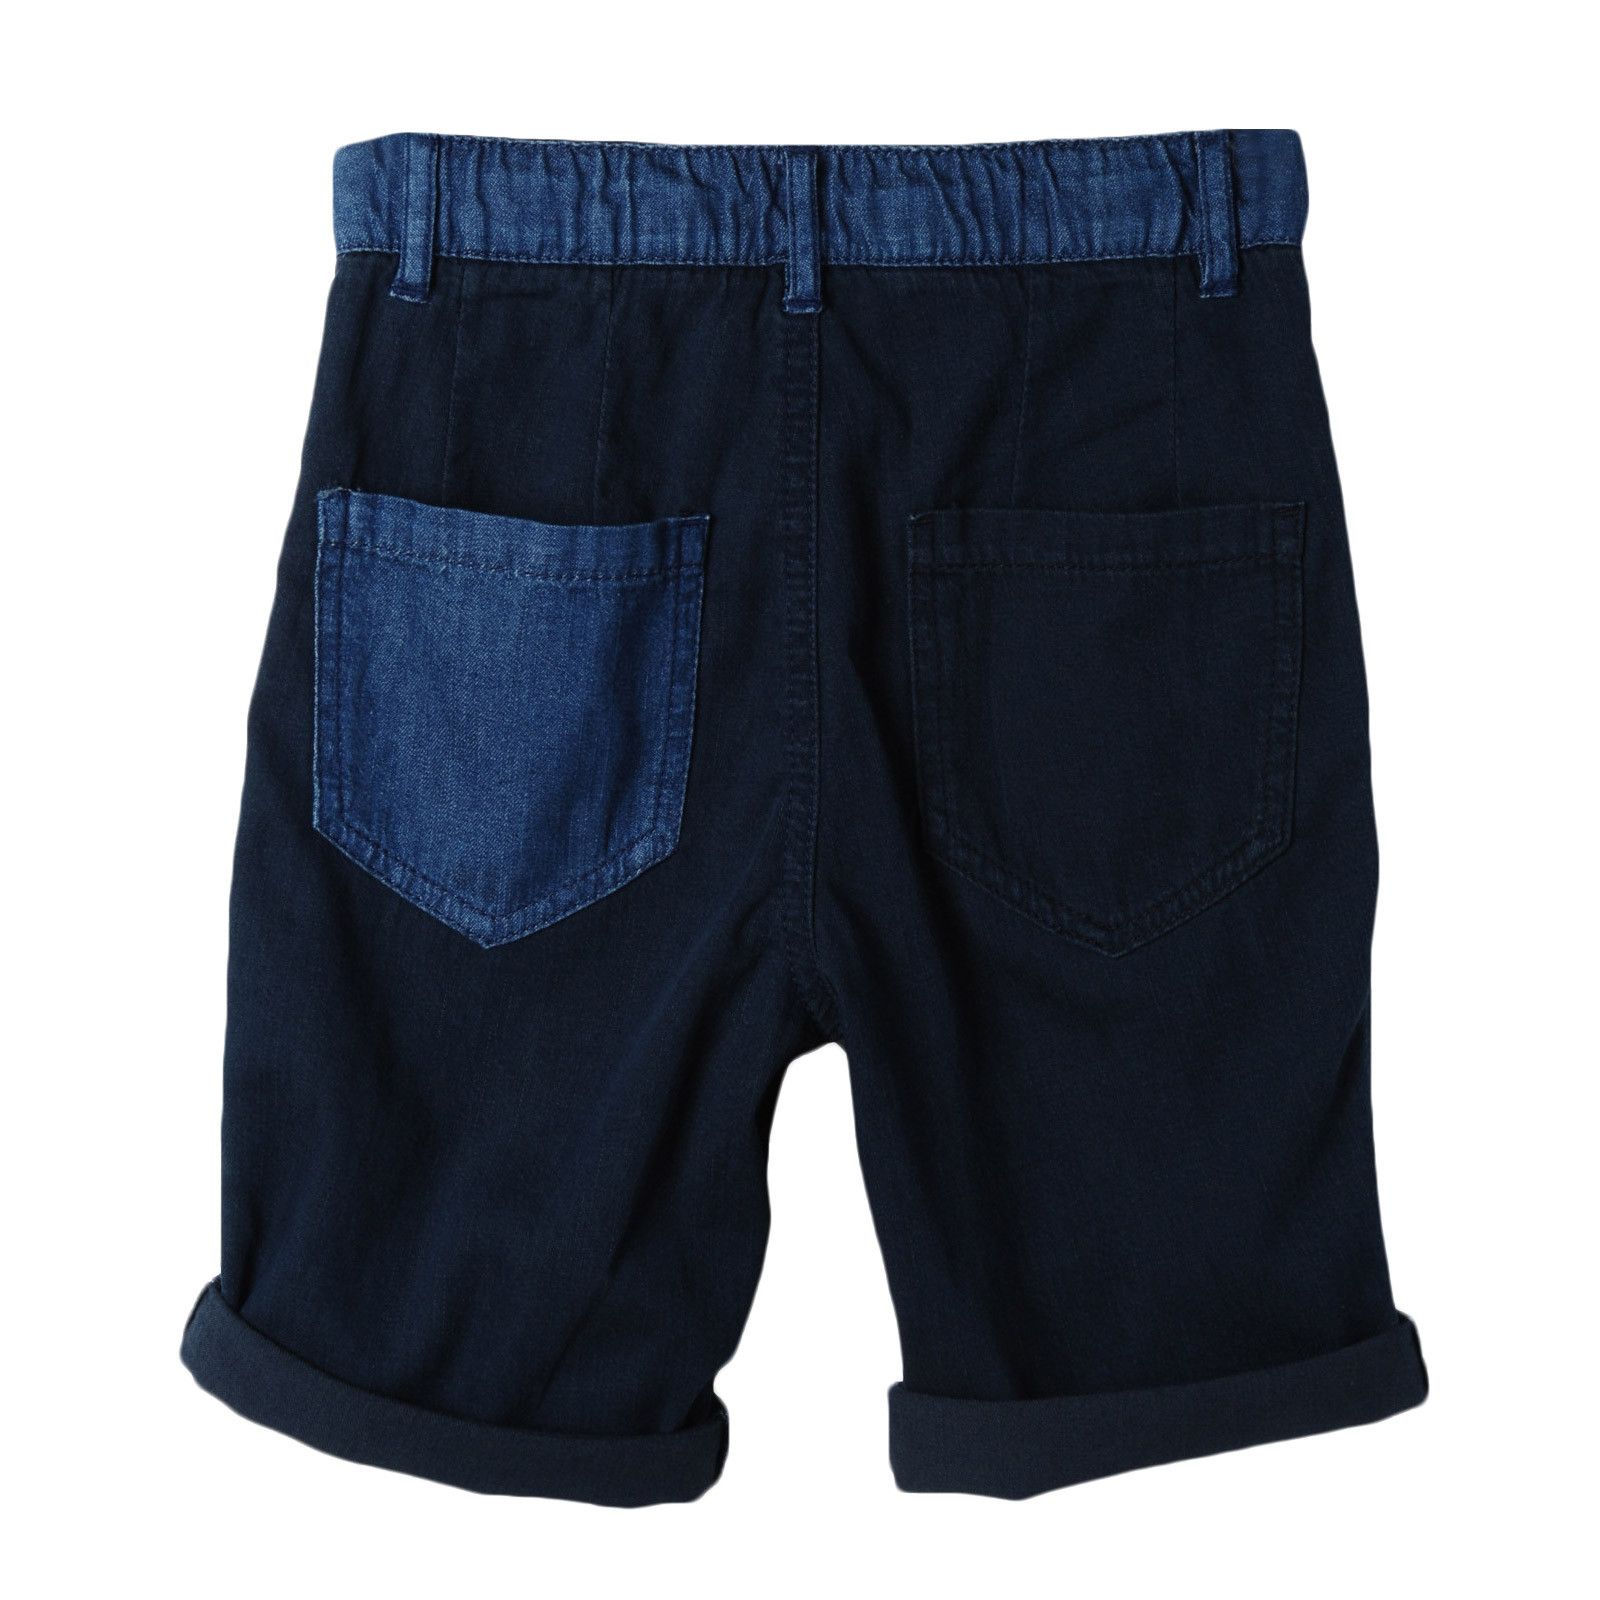 Boys Blue Cotton Denim Shorts With Turn Up Cuffs - CÉMAROSE | Children's Fashion Store - 2